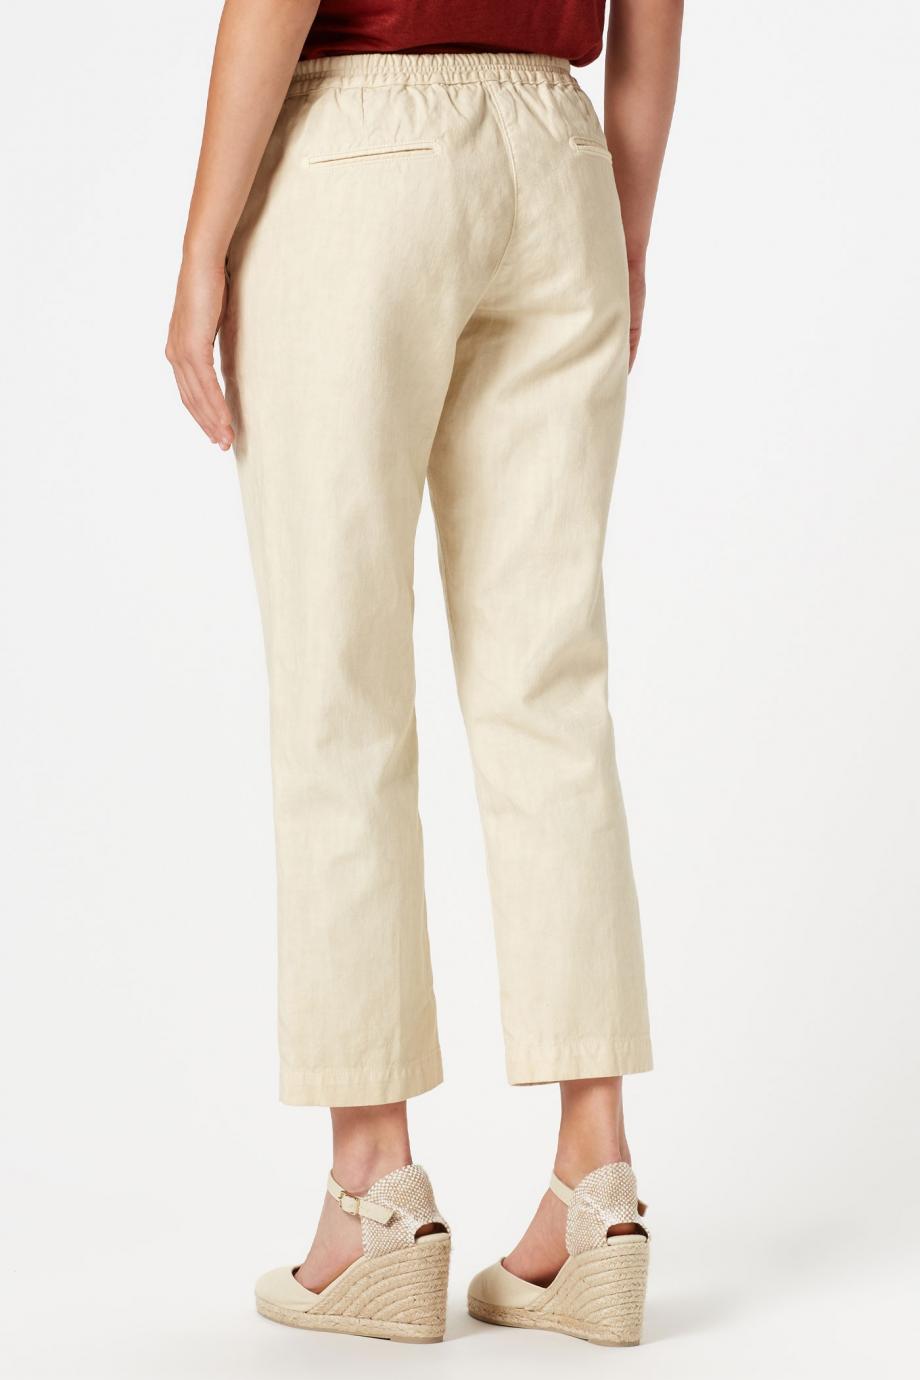 Panama cotton and linen pants 